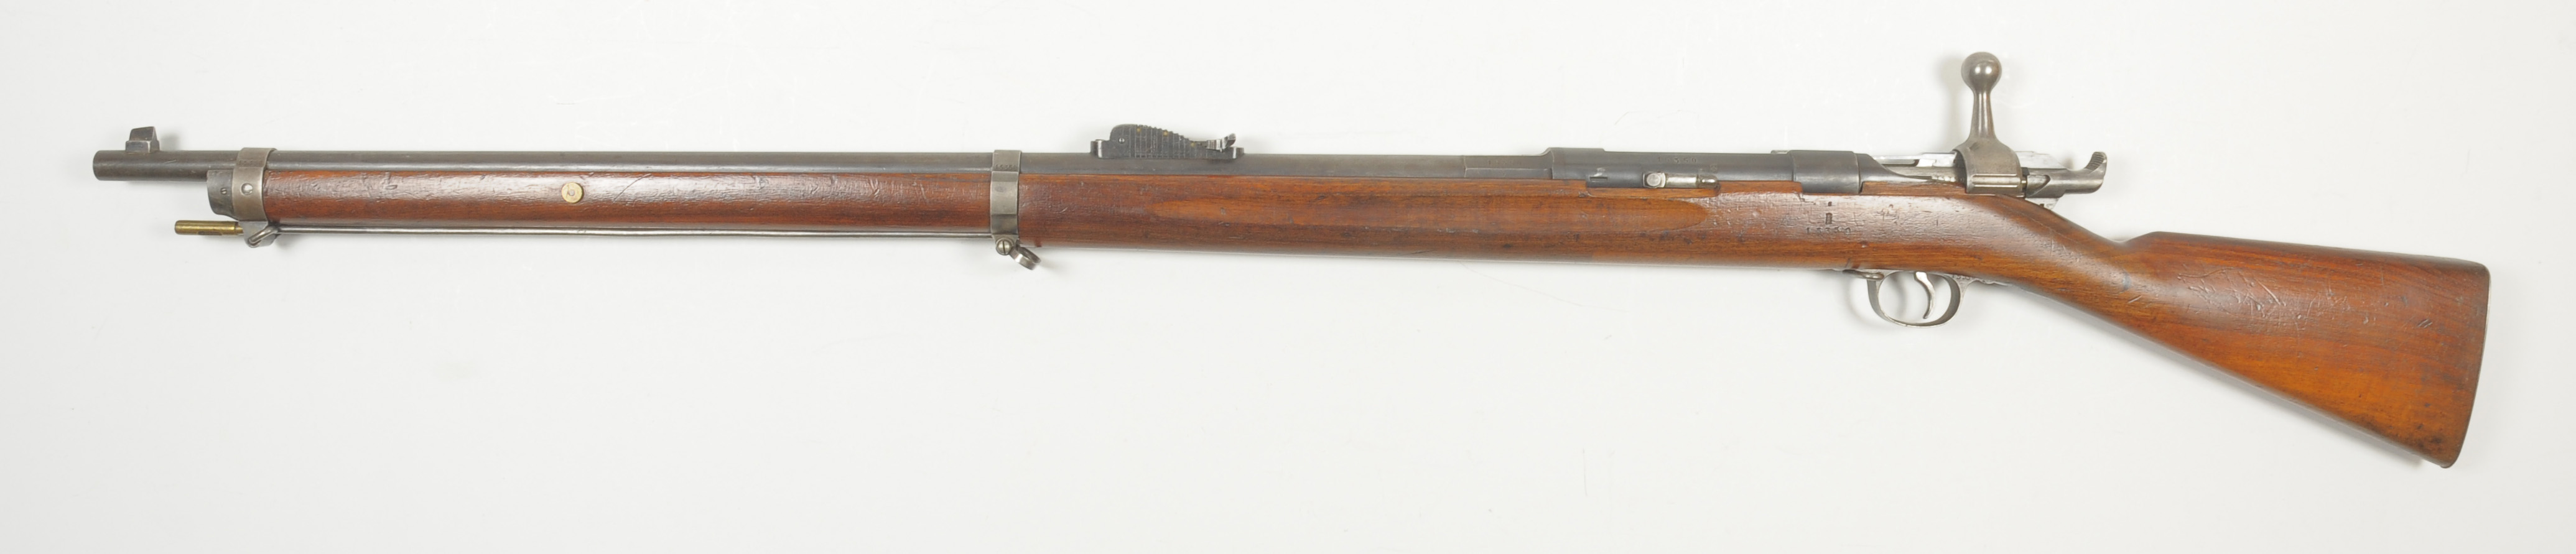 ./guns/rifle/bilder/Rifle-Kongsberg-Jarmann-M1887-15350-2.jpg